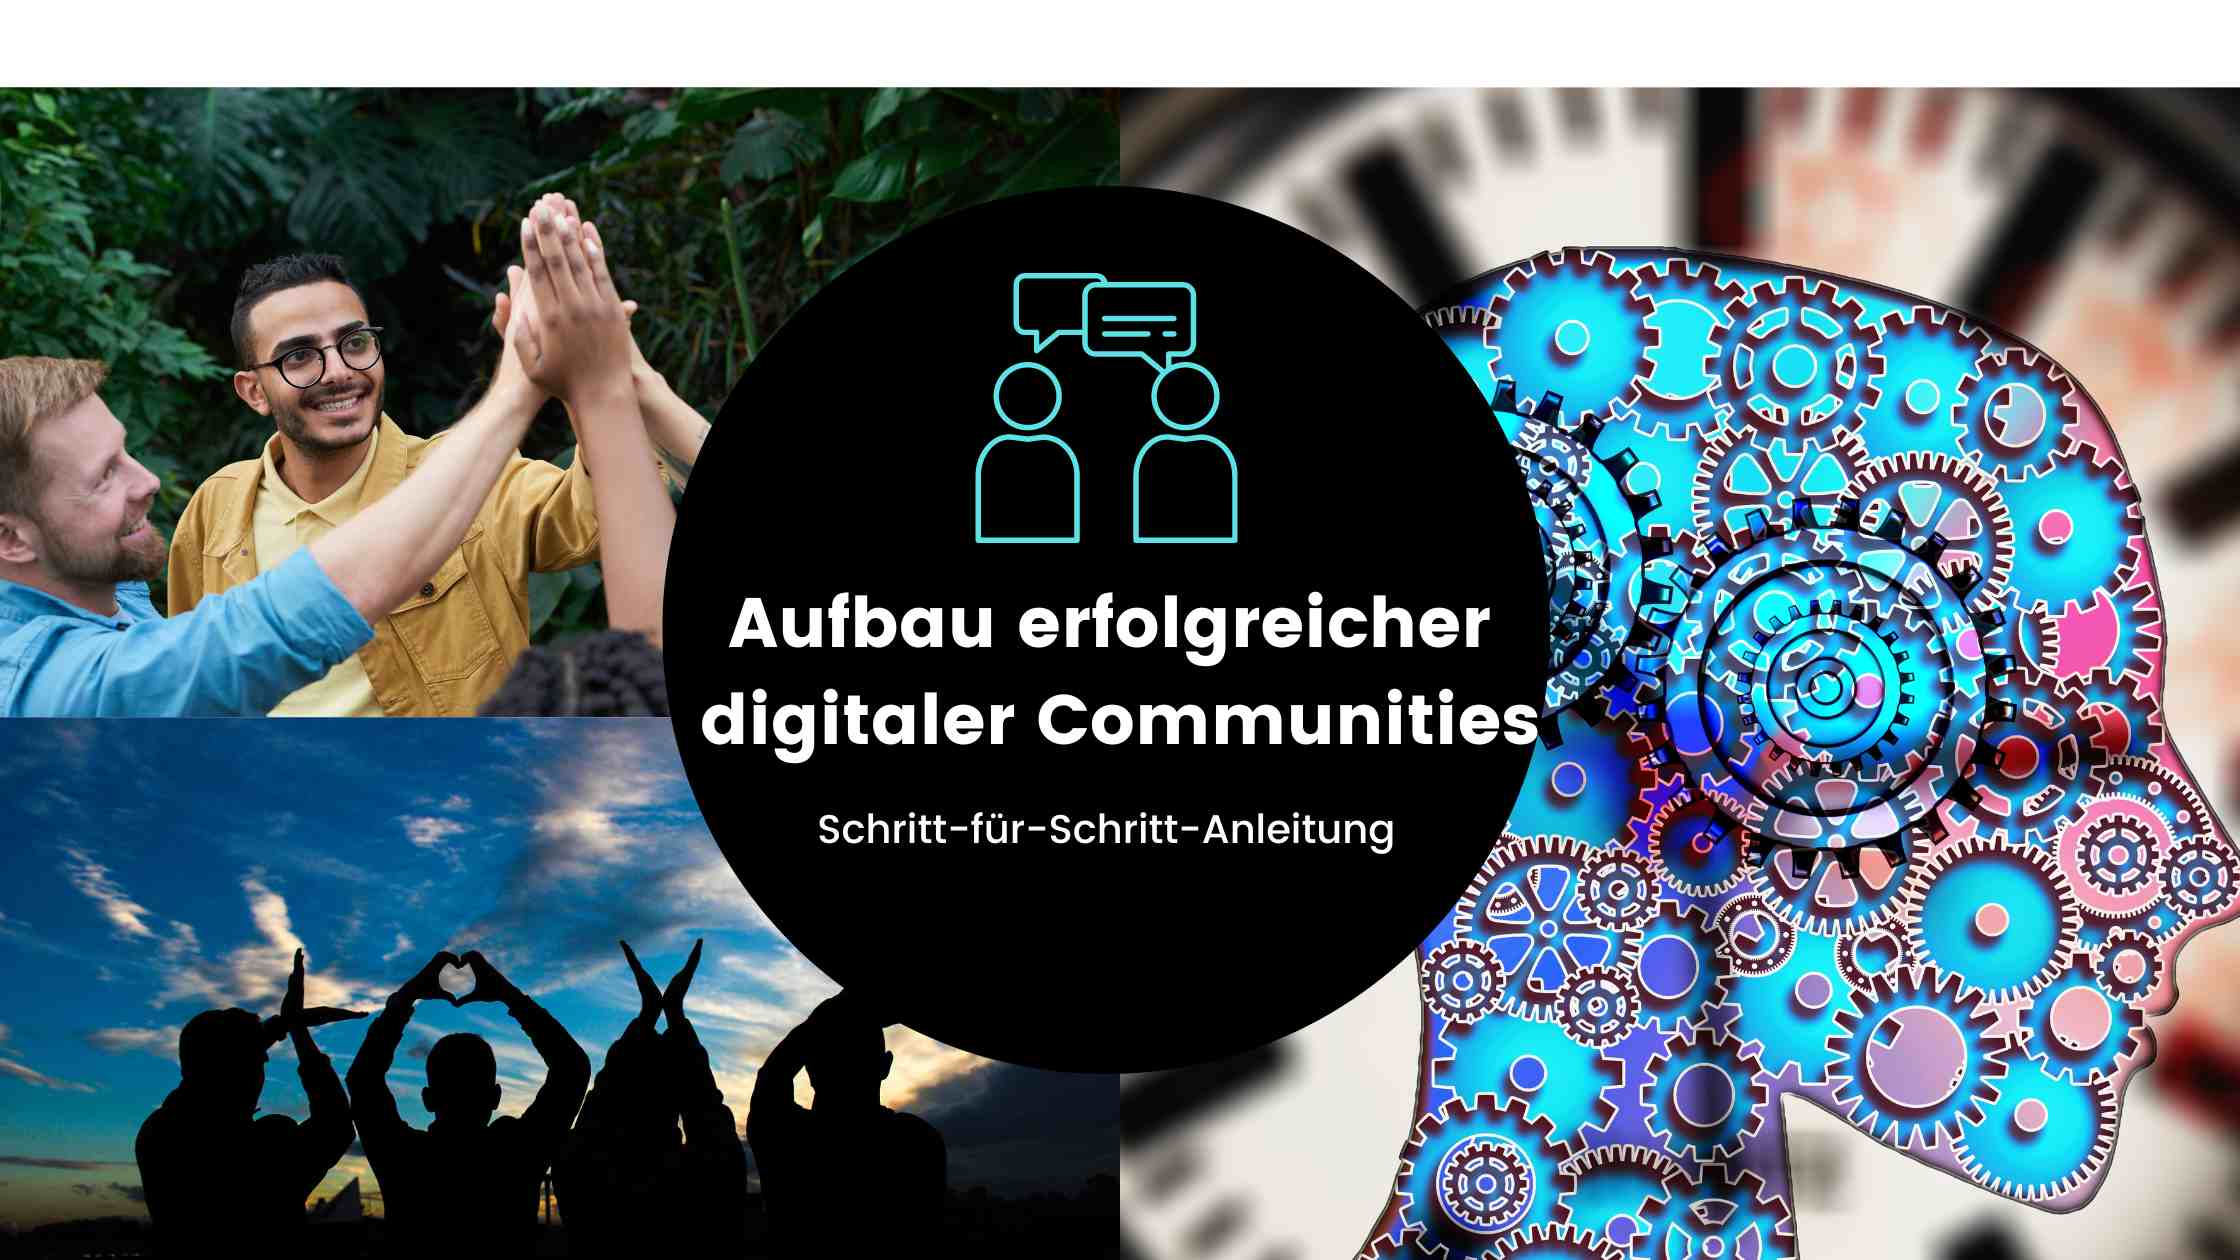 Aufbau erfolgreicher digitaler Communities: Schritt-für-Schritt-Anleitung